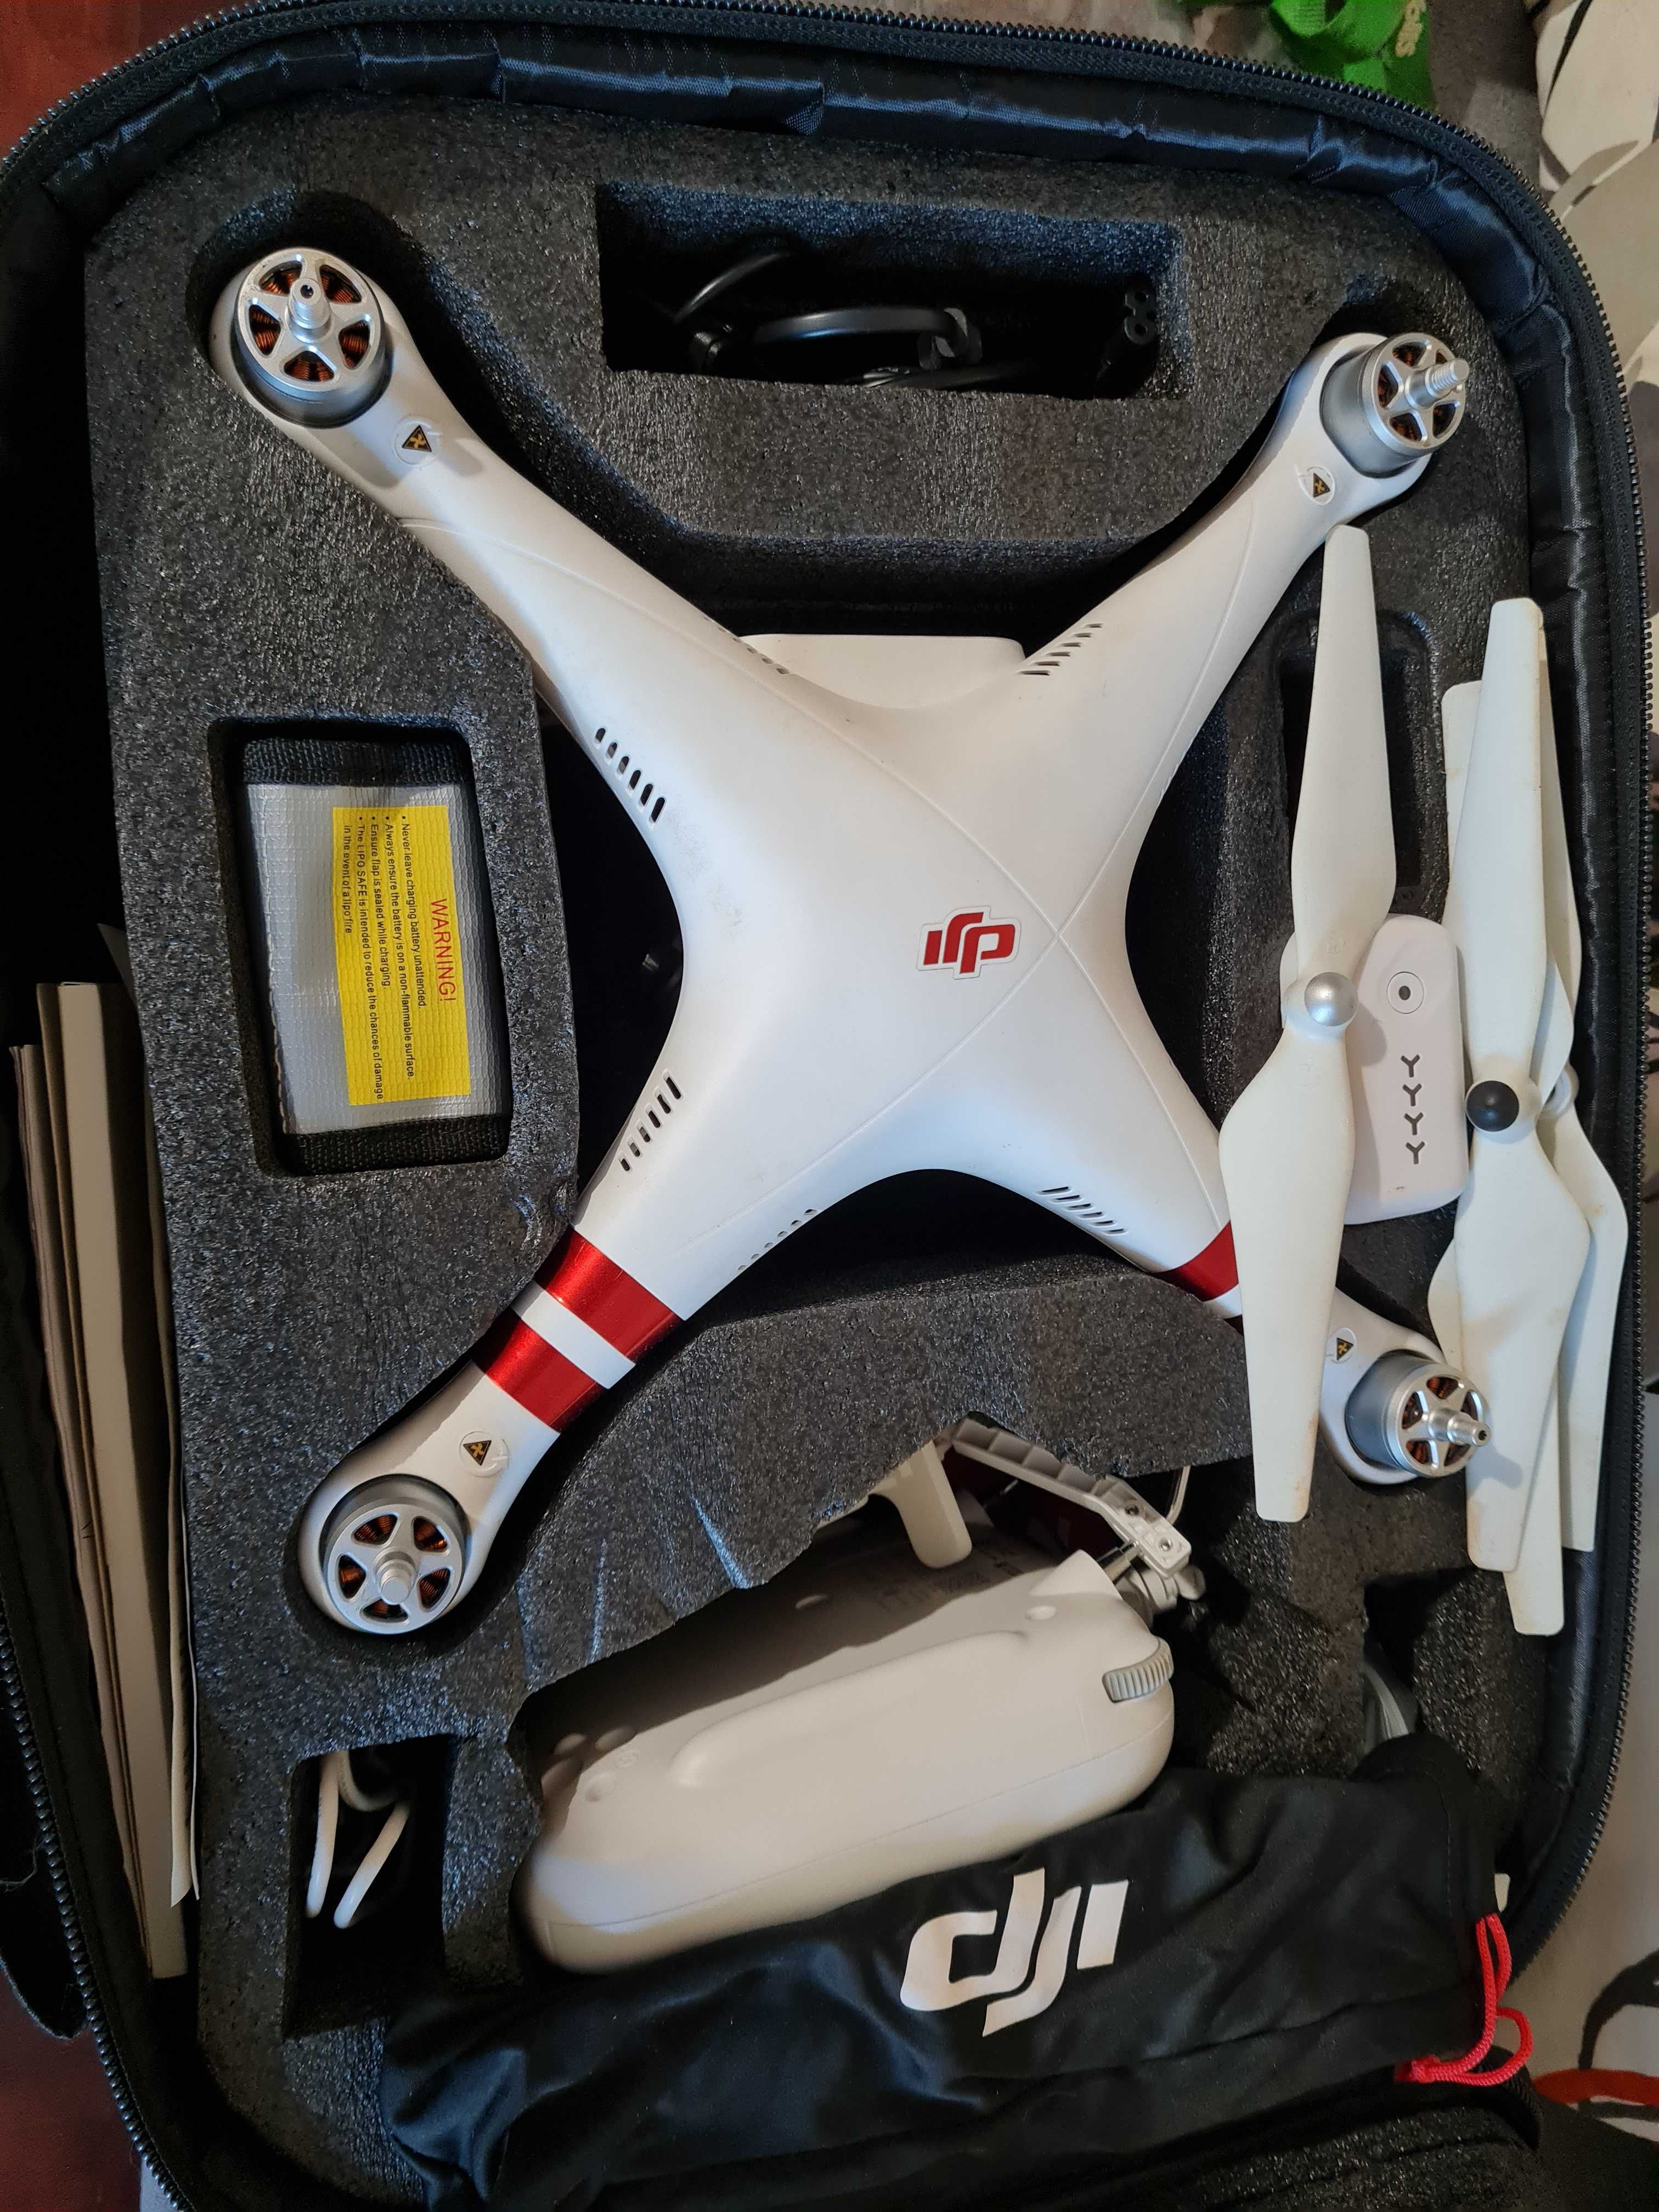 Drone DJI Phantom 3 Standard Edition